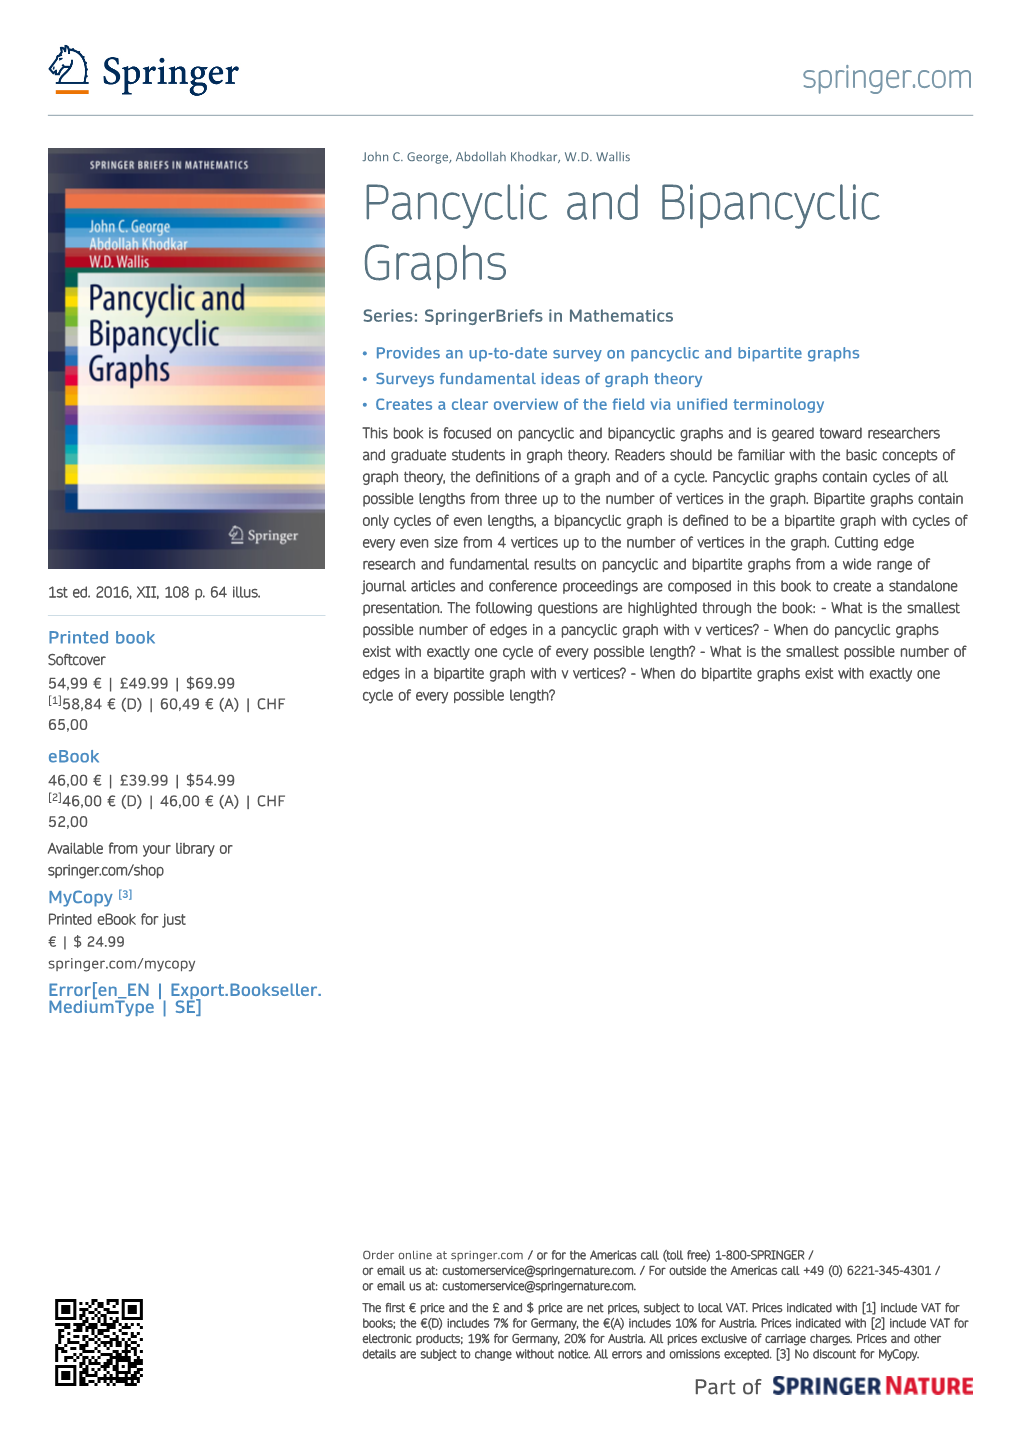 Pancyclic and Bipancyclic Graphs Series: Springerbriefs in Mathematics